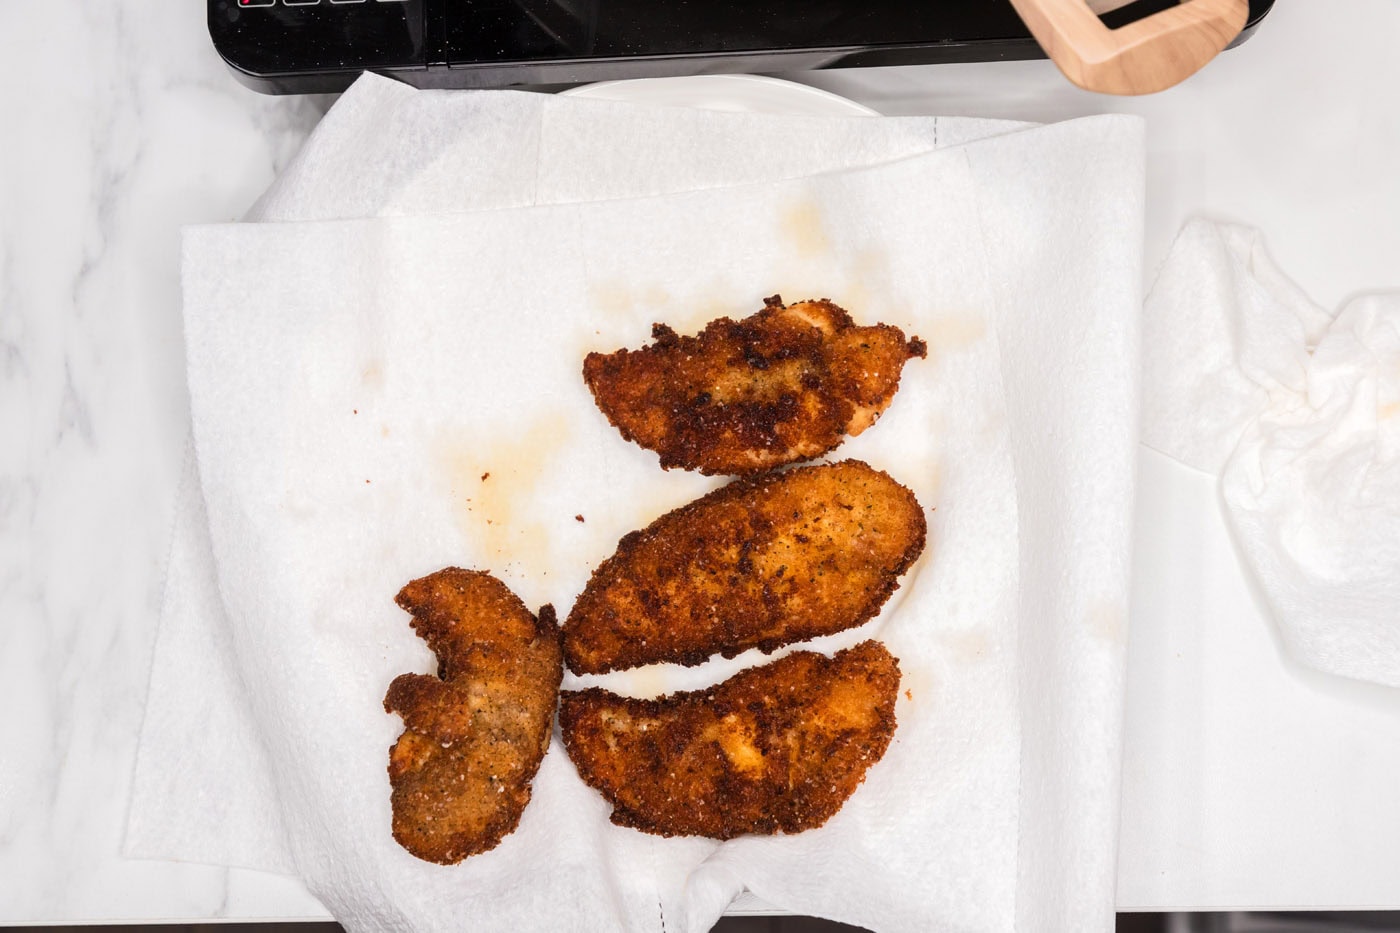 crispy fried chicken tenders draining on paper towels